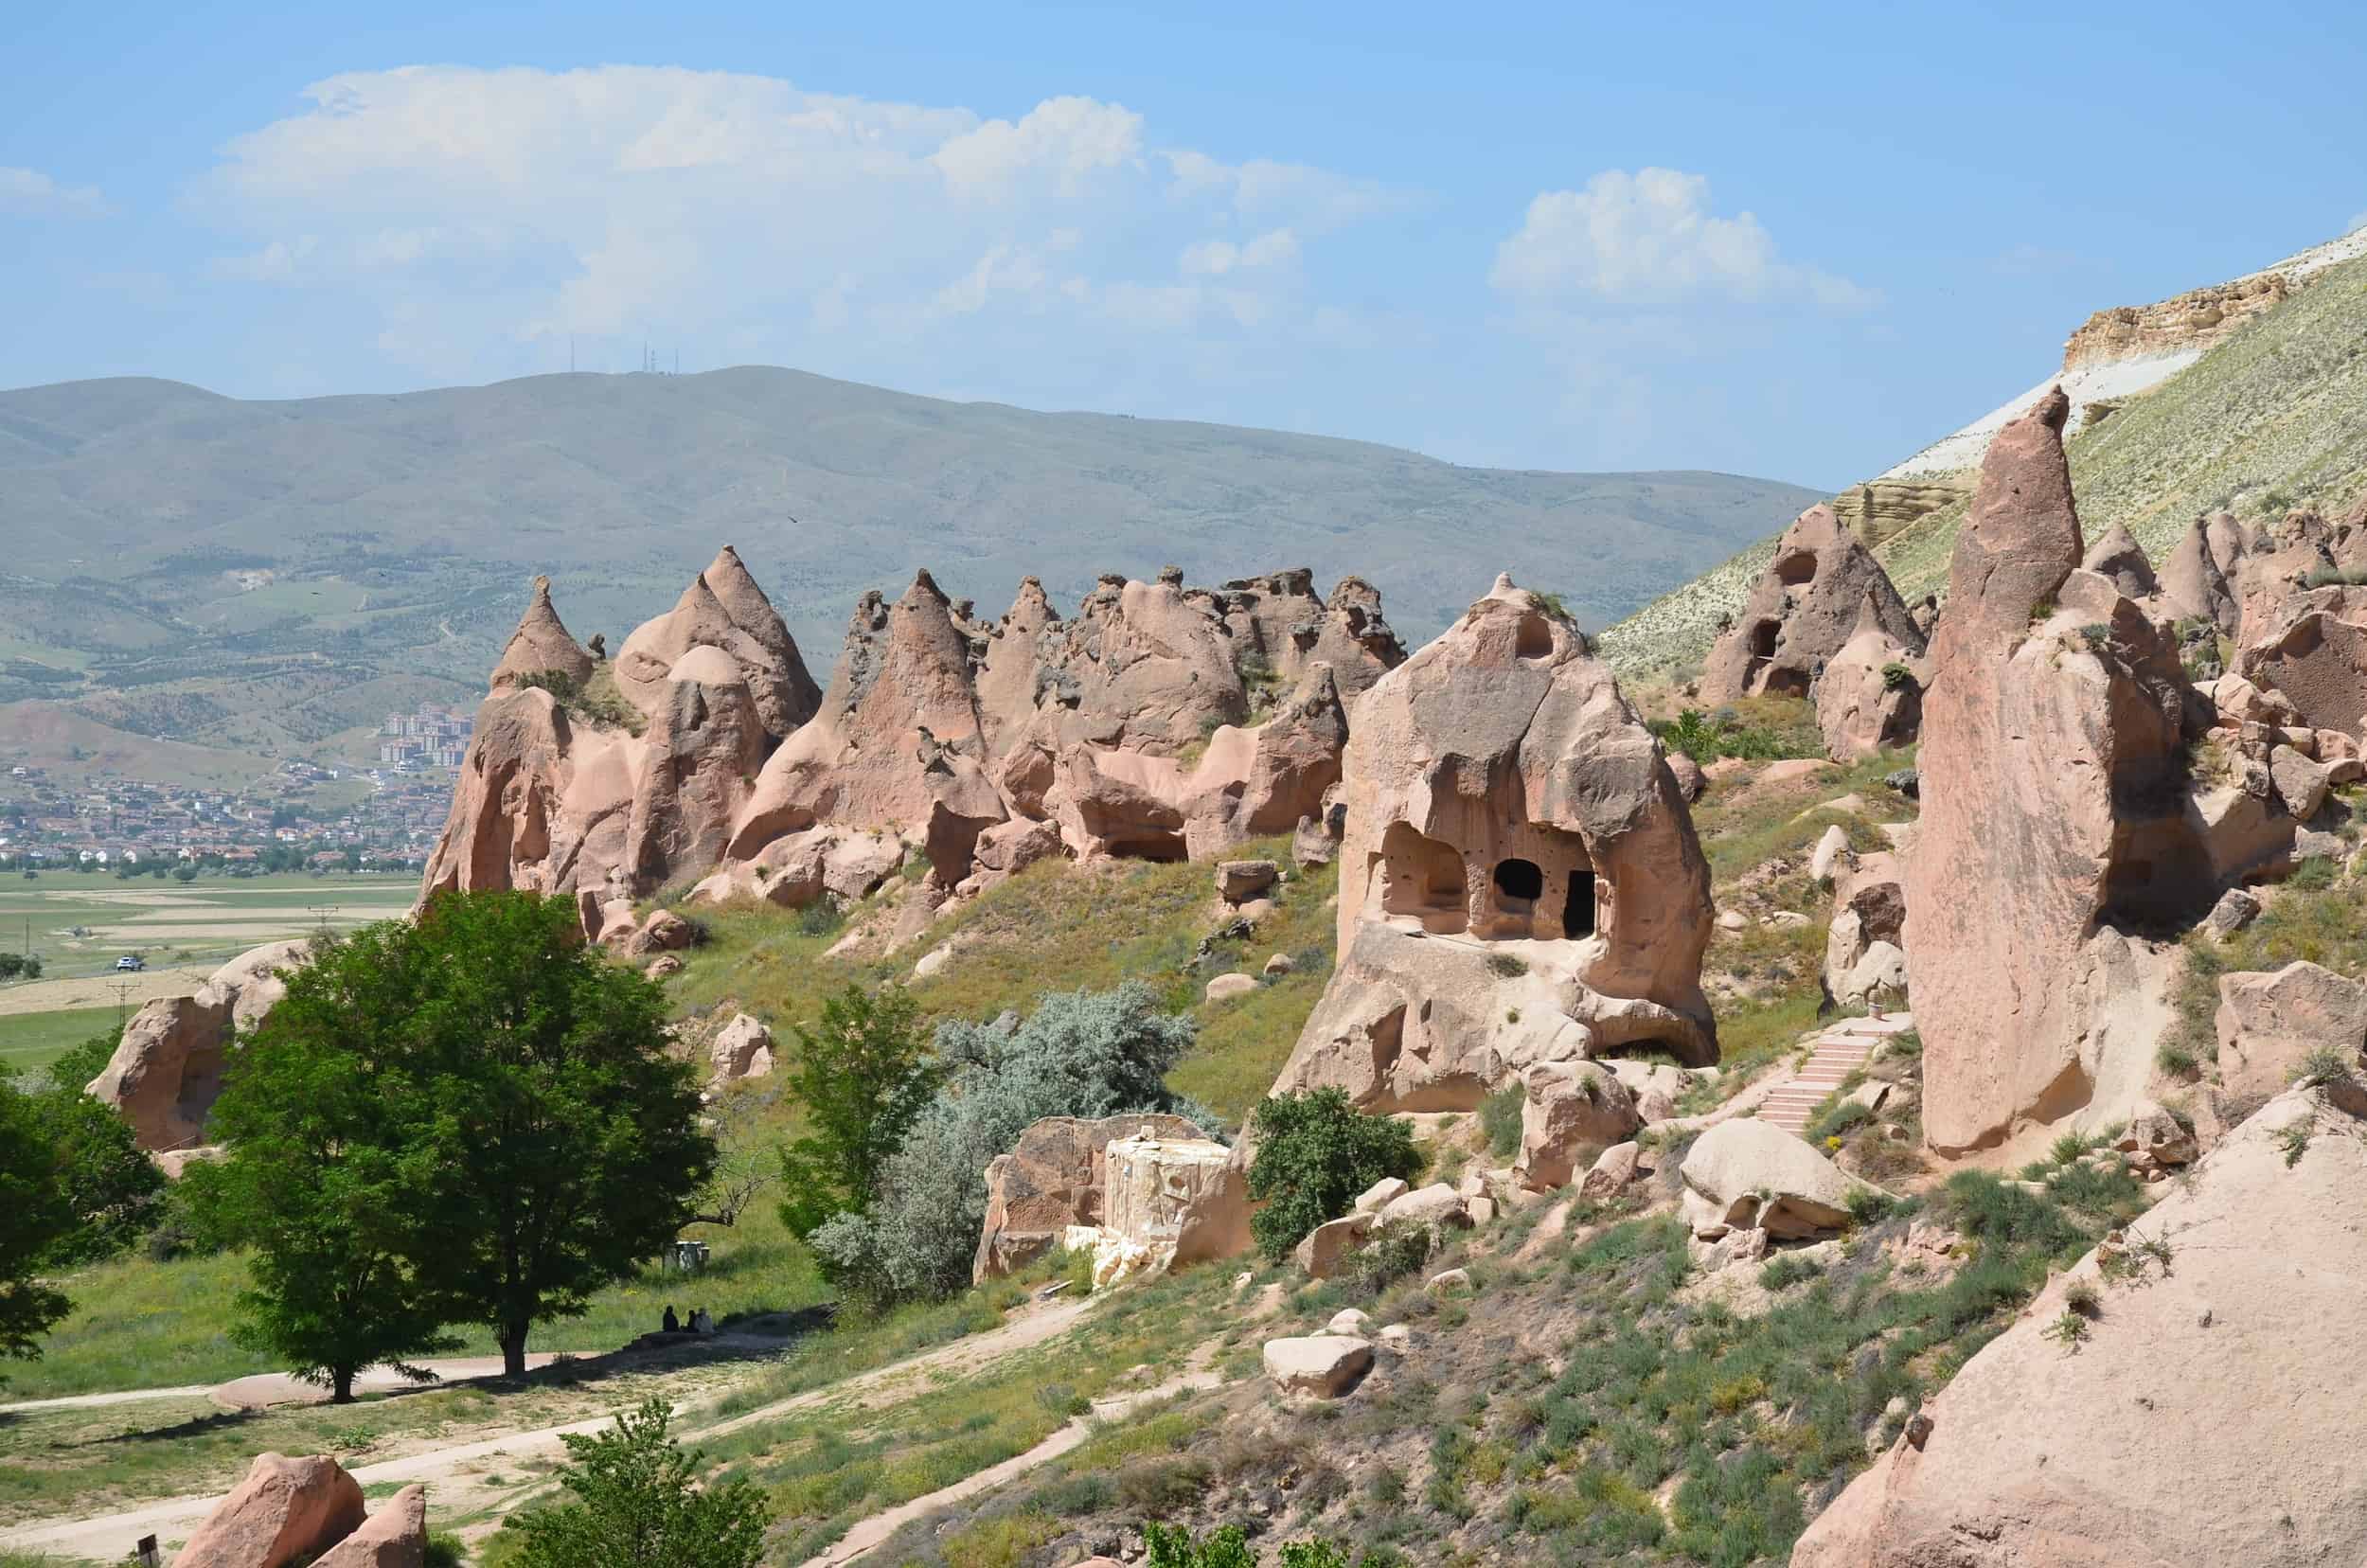 Second valley at Zelve Open Air Museum in Cappadocia, Turkey